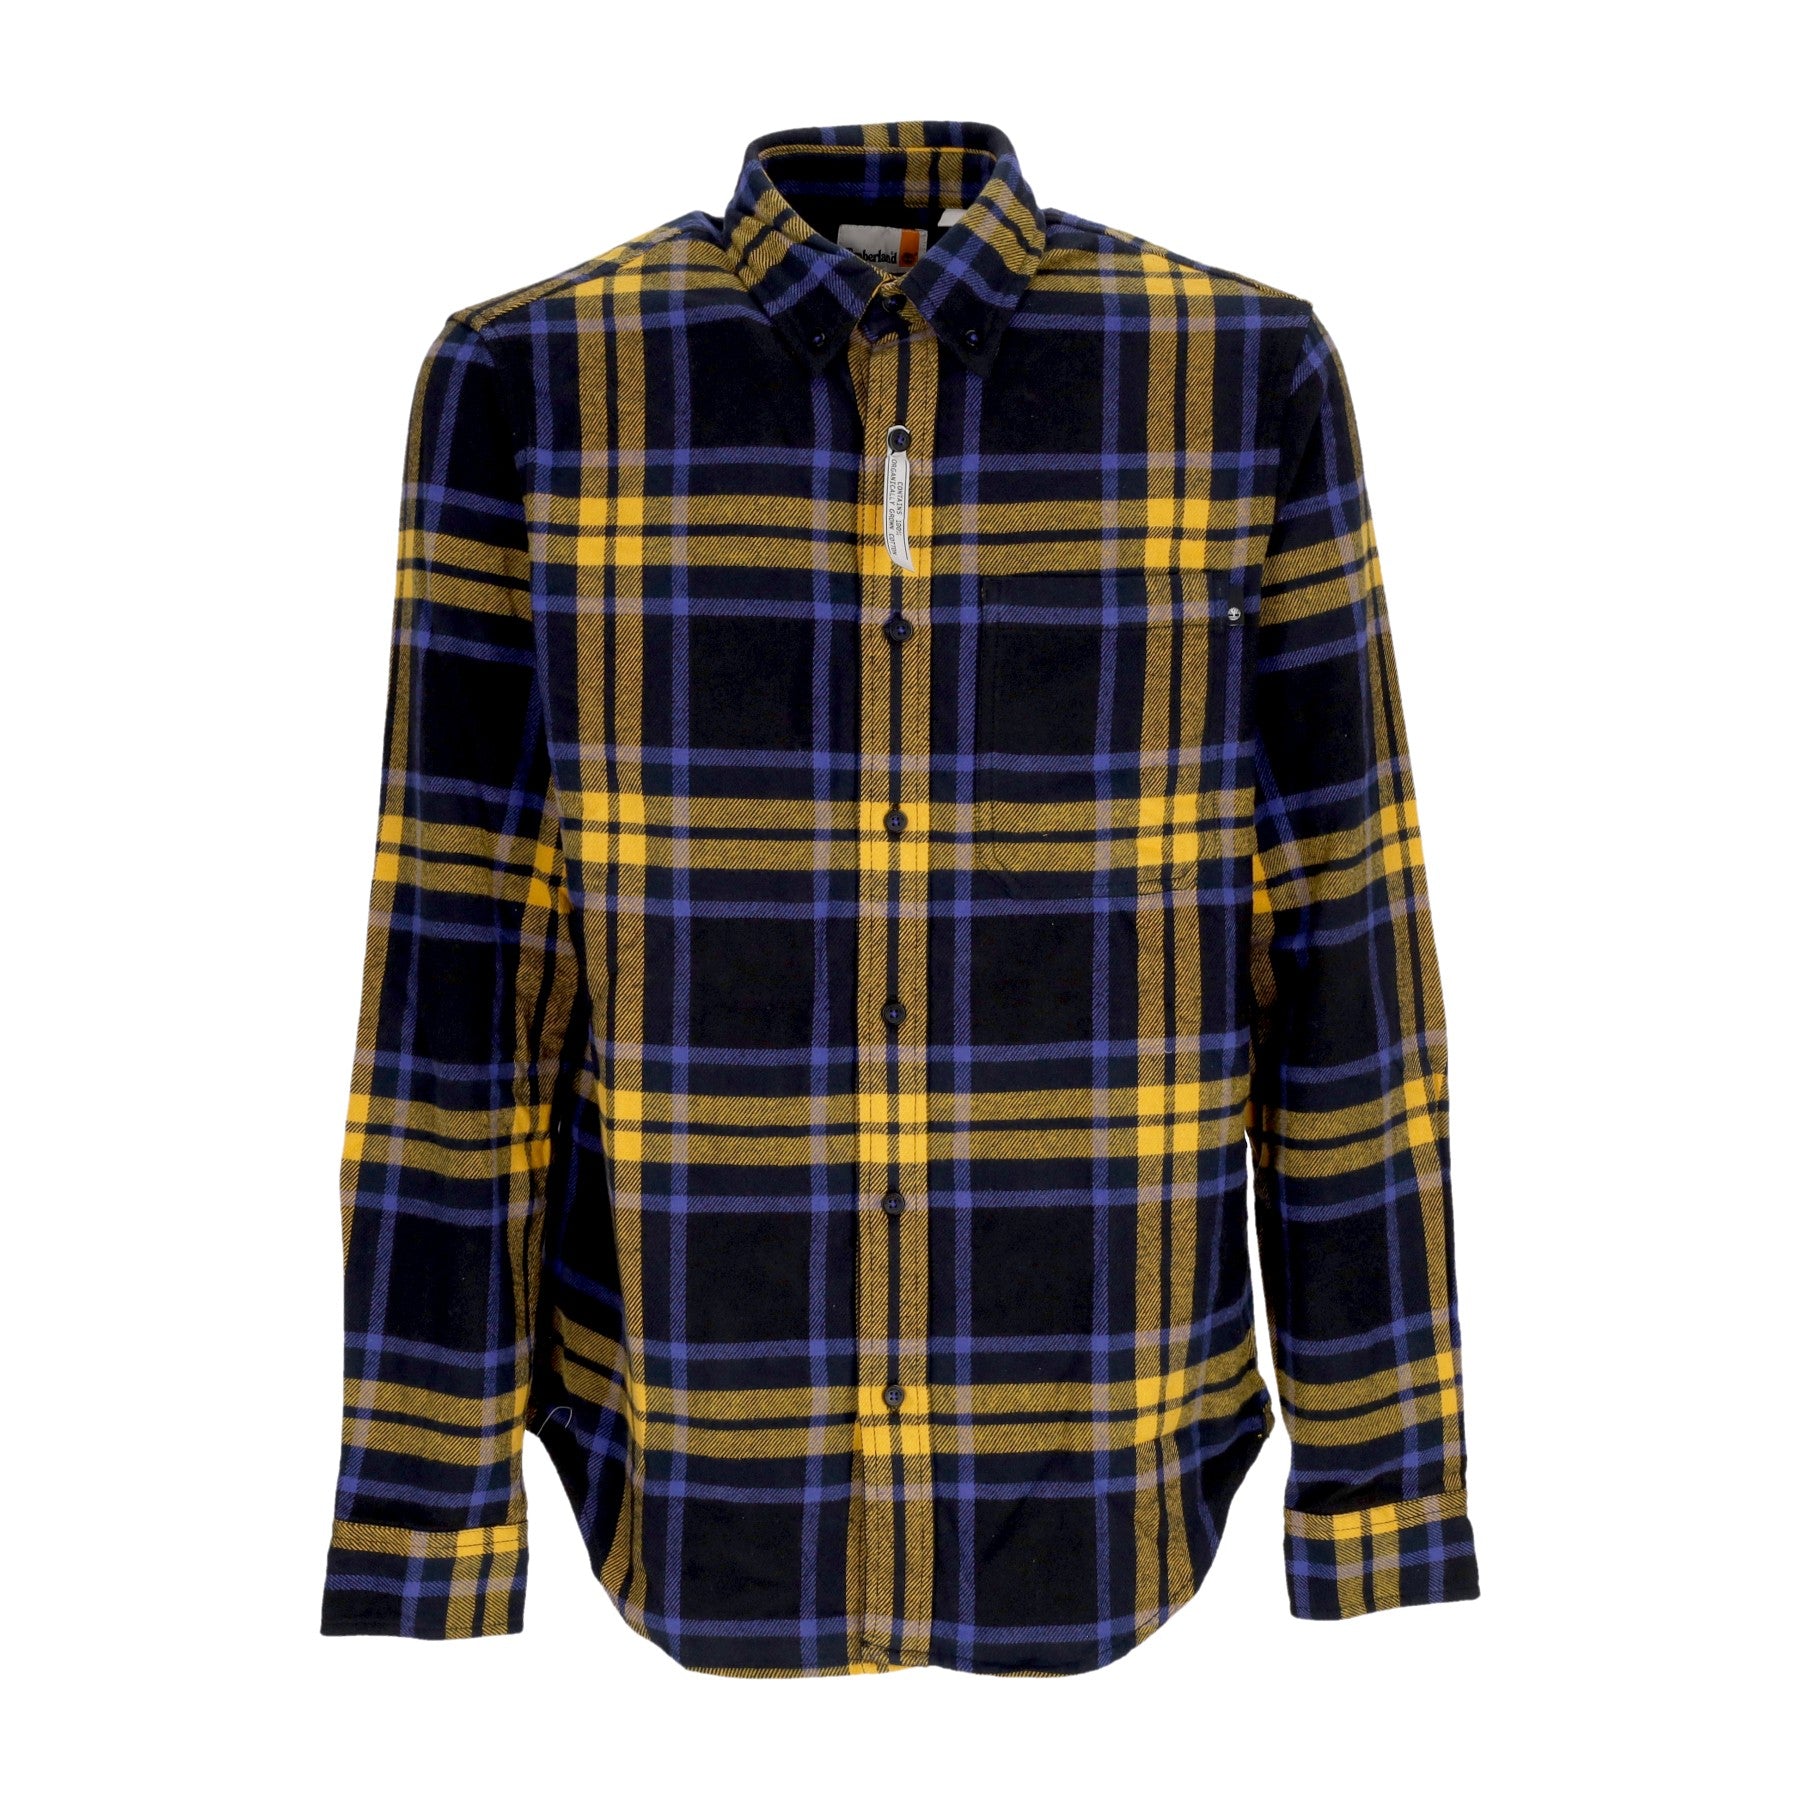 Timberland, Camicia Manica Lunga Uomo L/s Heavy Flannel Plaid Shirt, Black